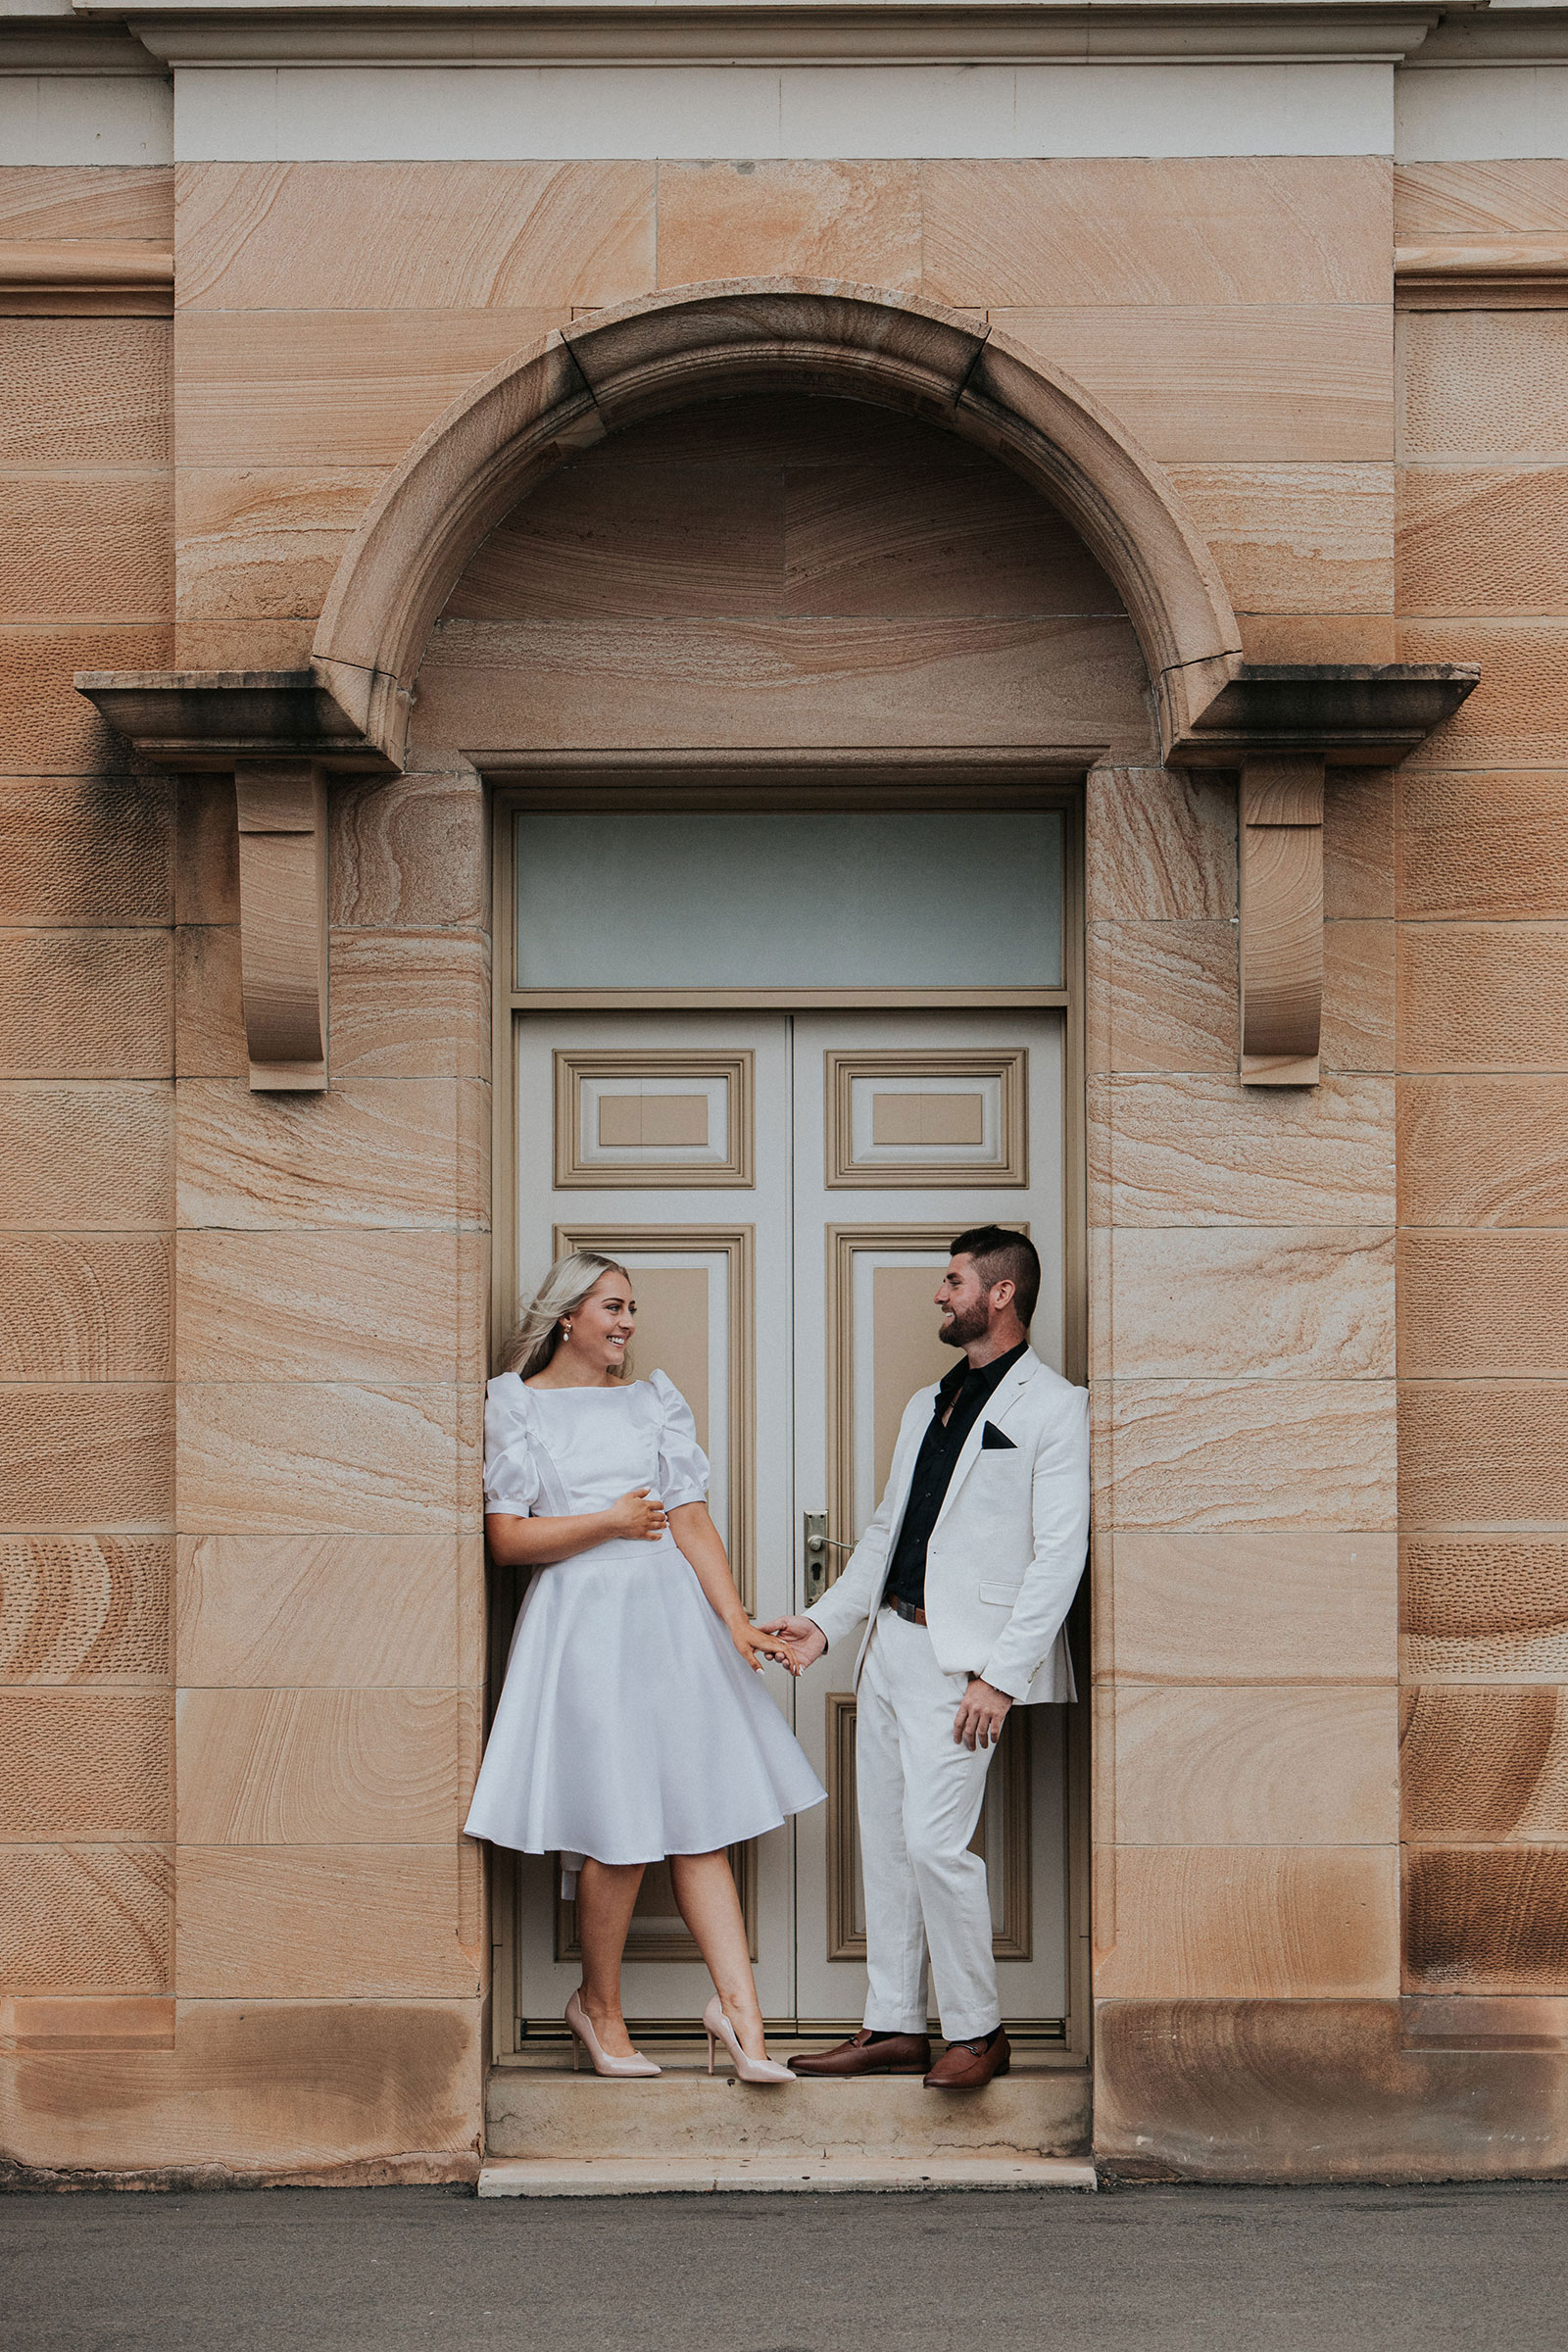 Brisbane-Registry-Wedding-Neil-Hole-Photography